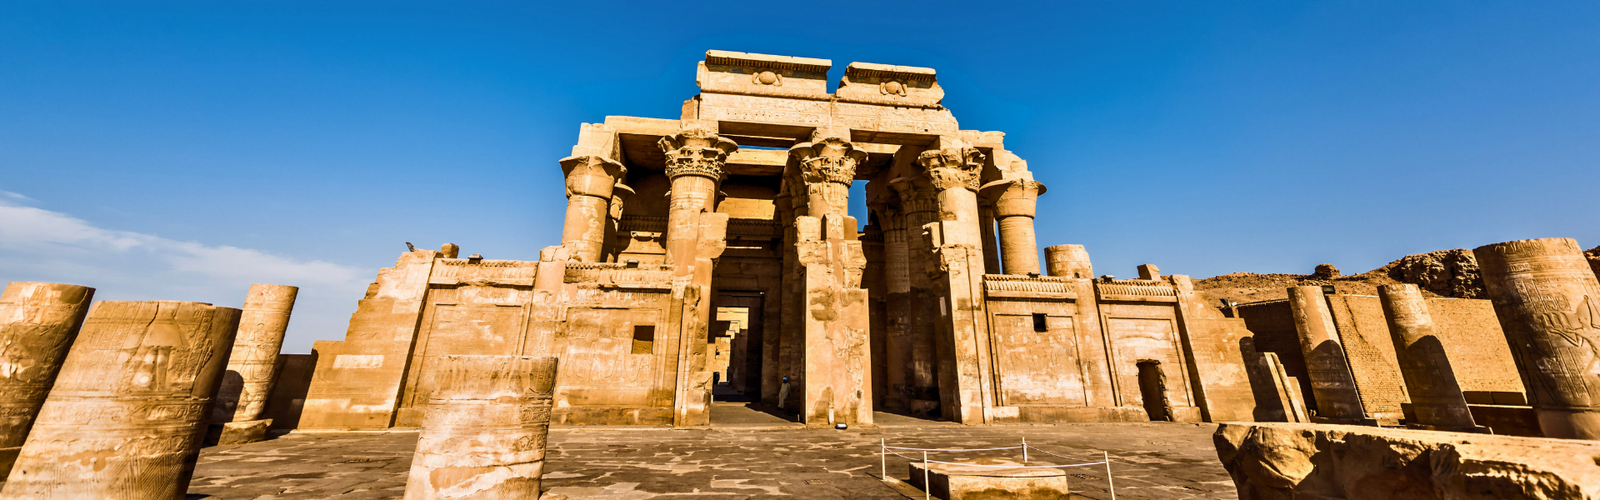 The Kom Ombo Temple in Luxor, Egypt